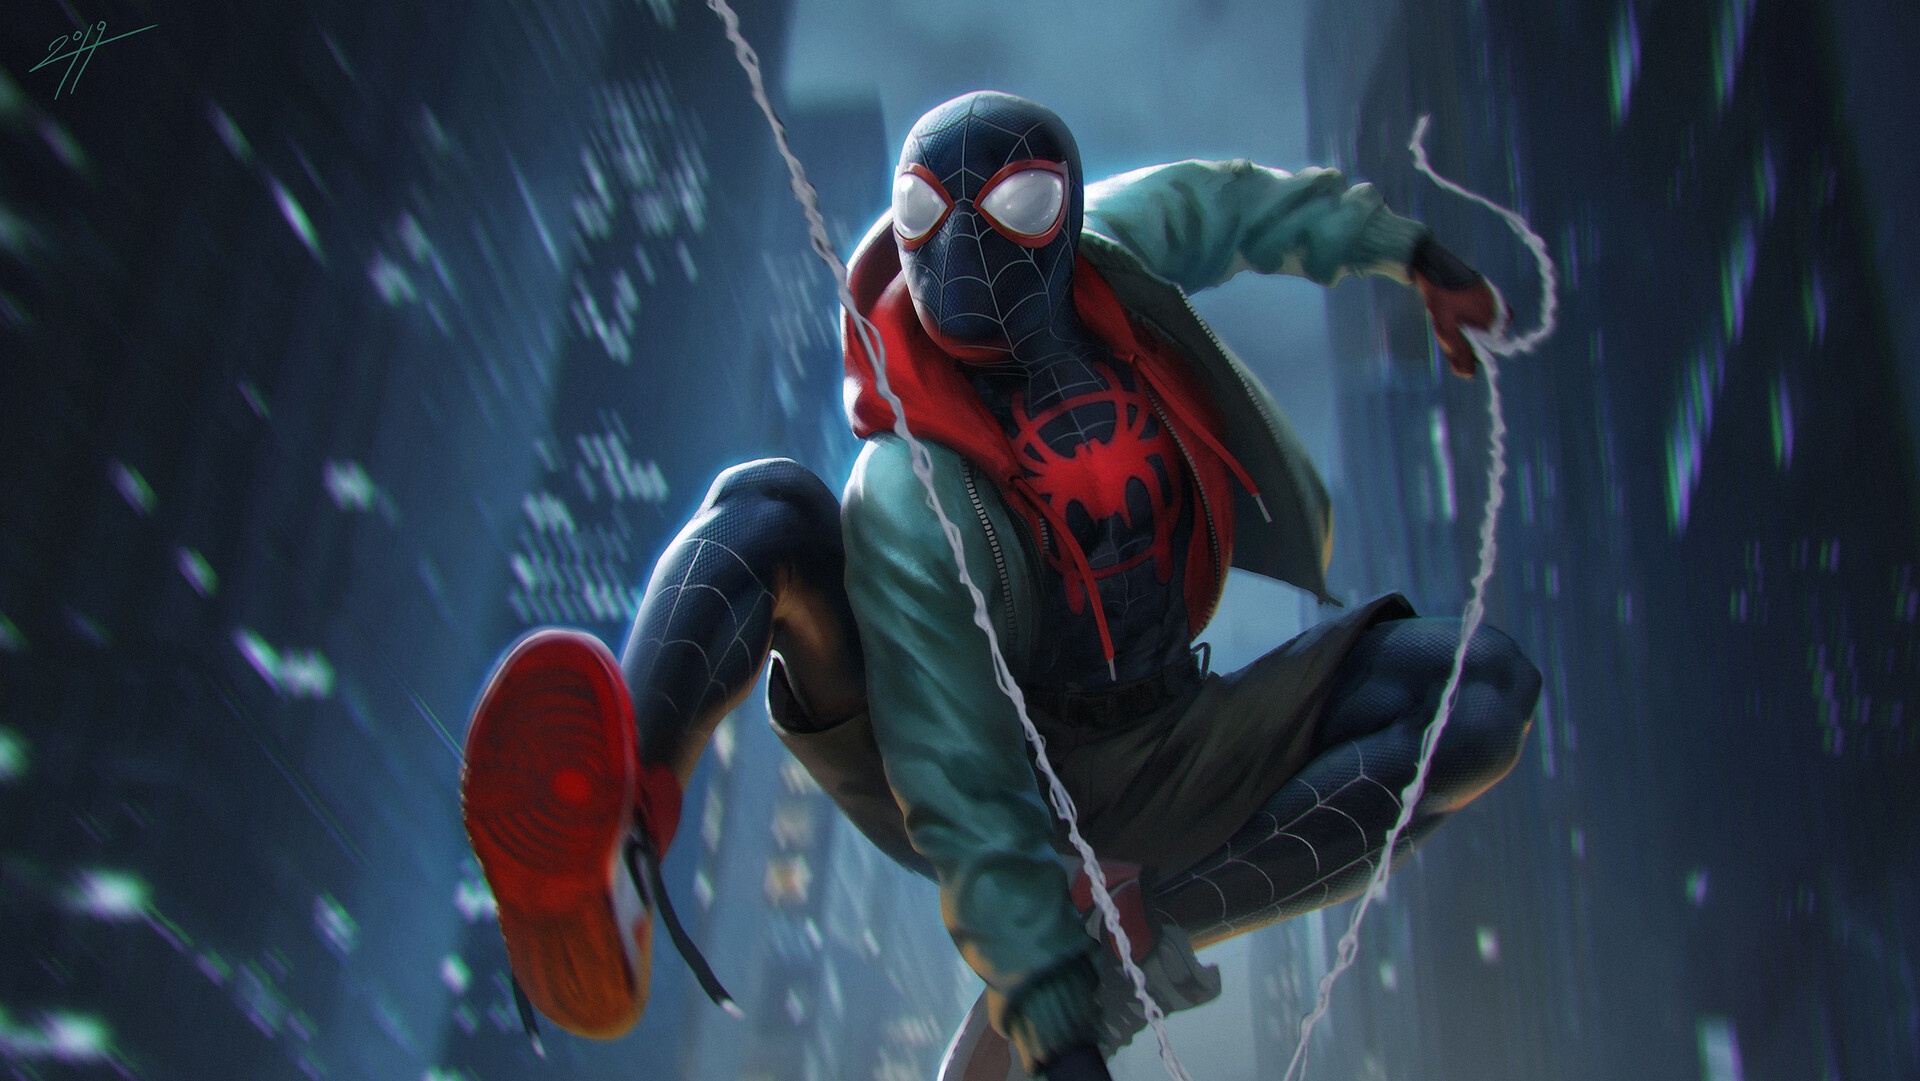 General 1920x1081 Miles Morales Spider-Man artwork superhero Marvel Comics low-angle digital art 2019 (year)